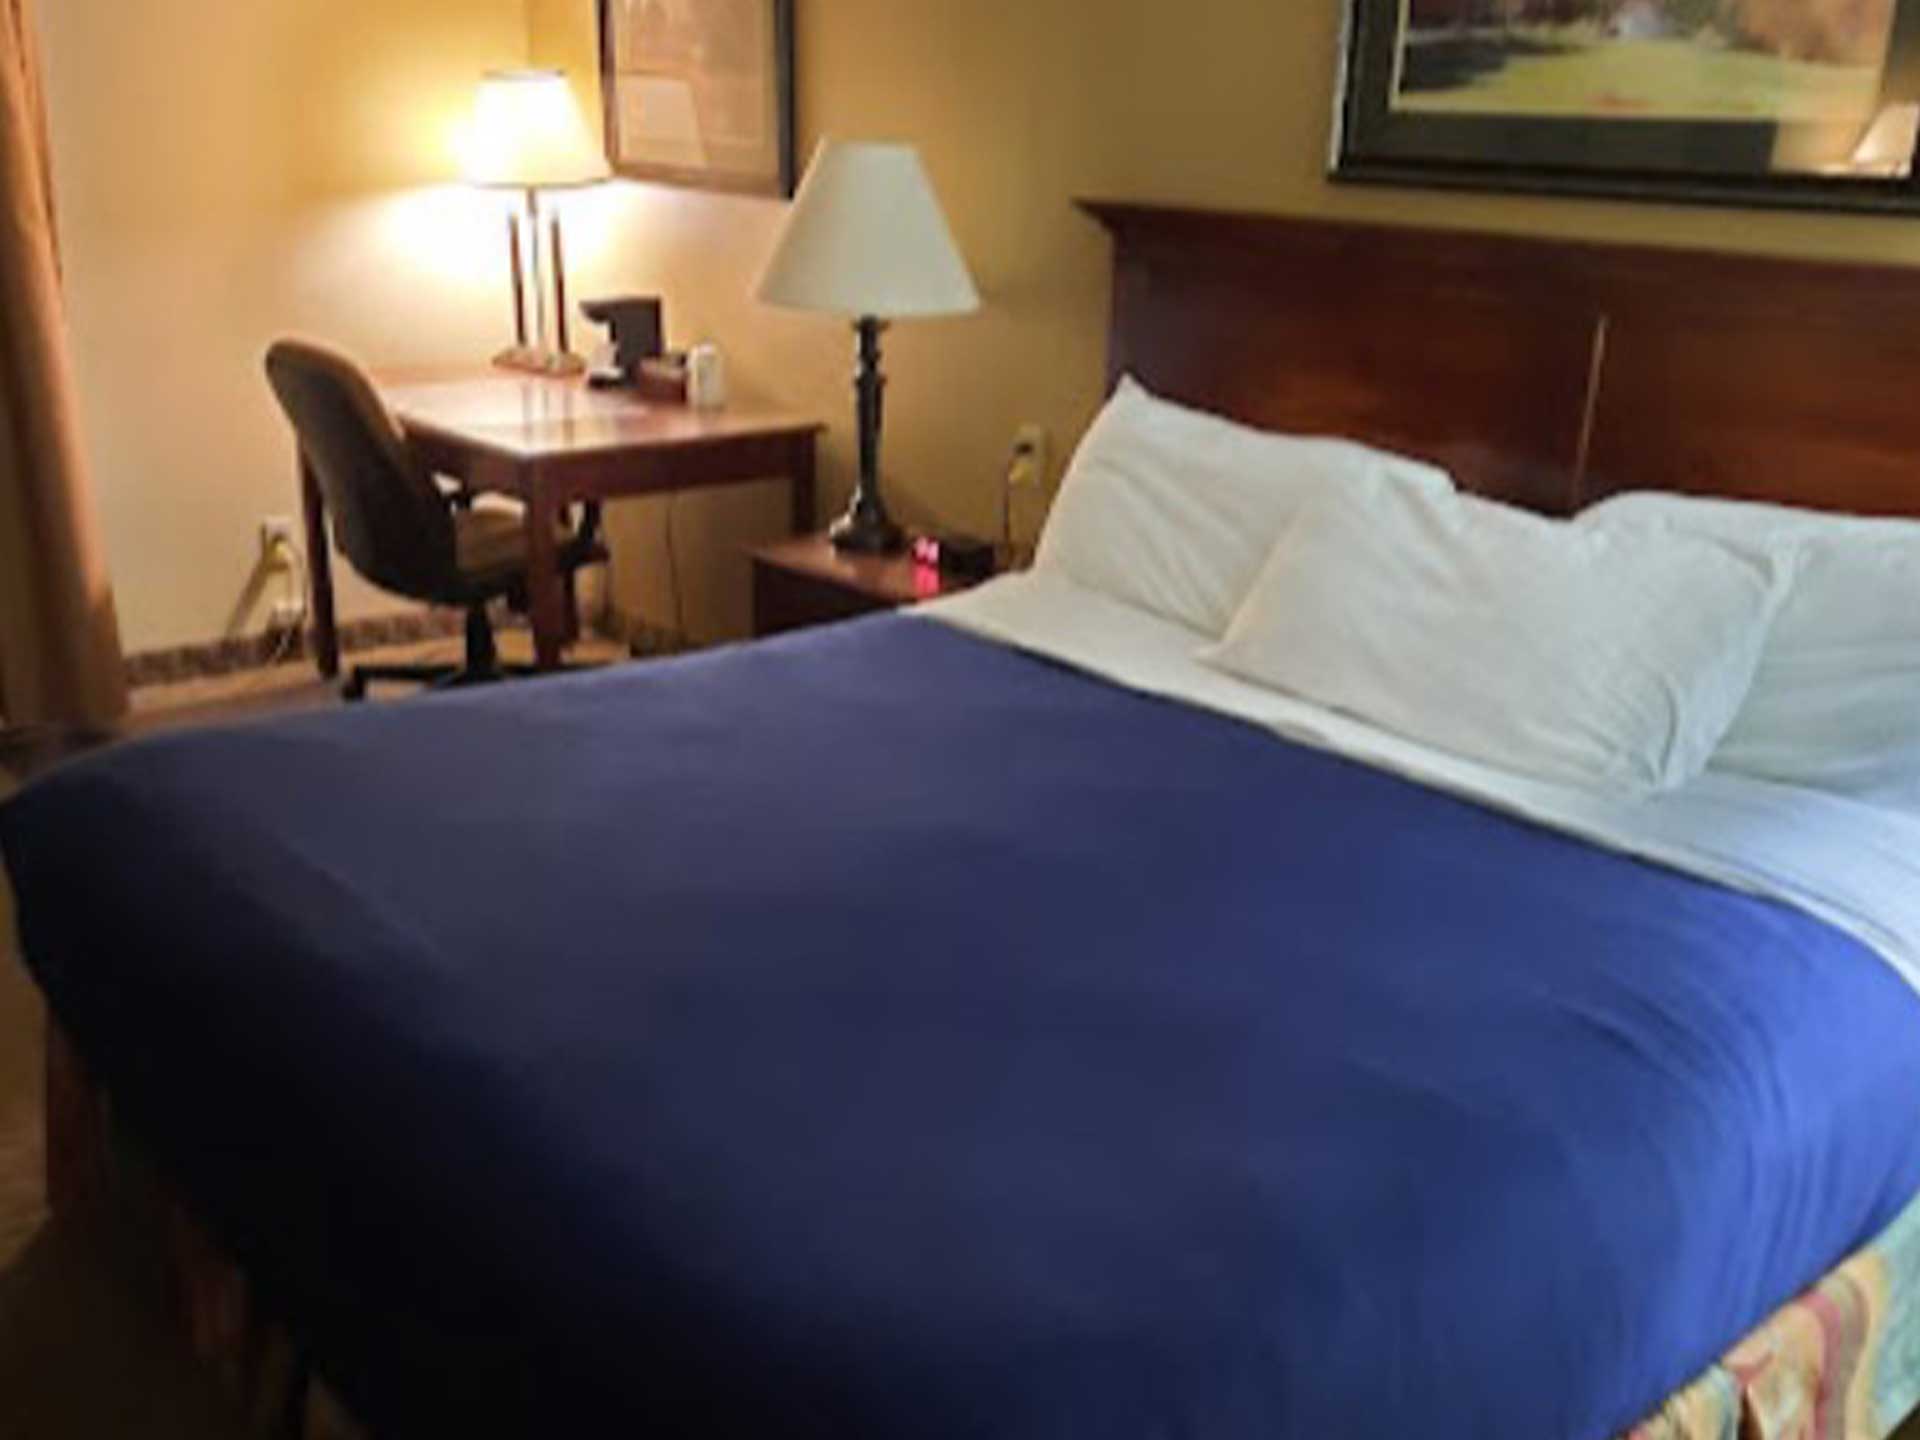 The regular knig room — hotel in McCook, NE